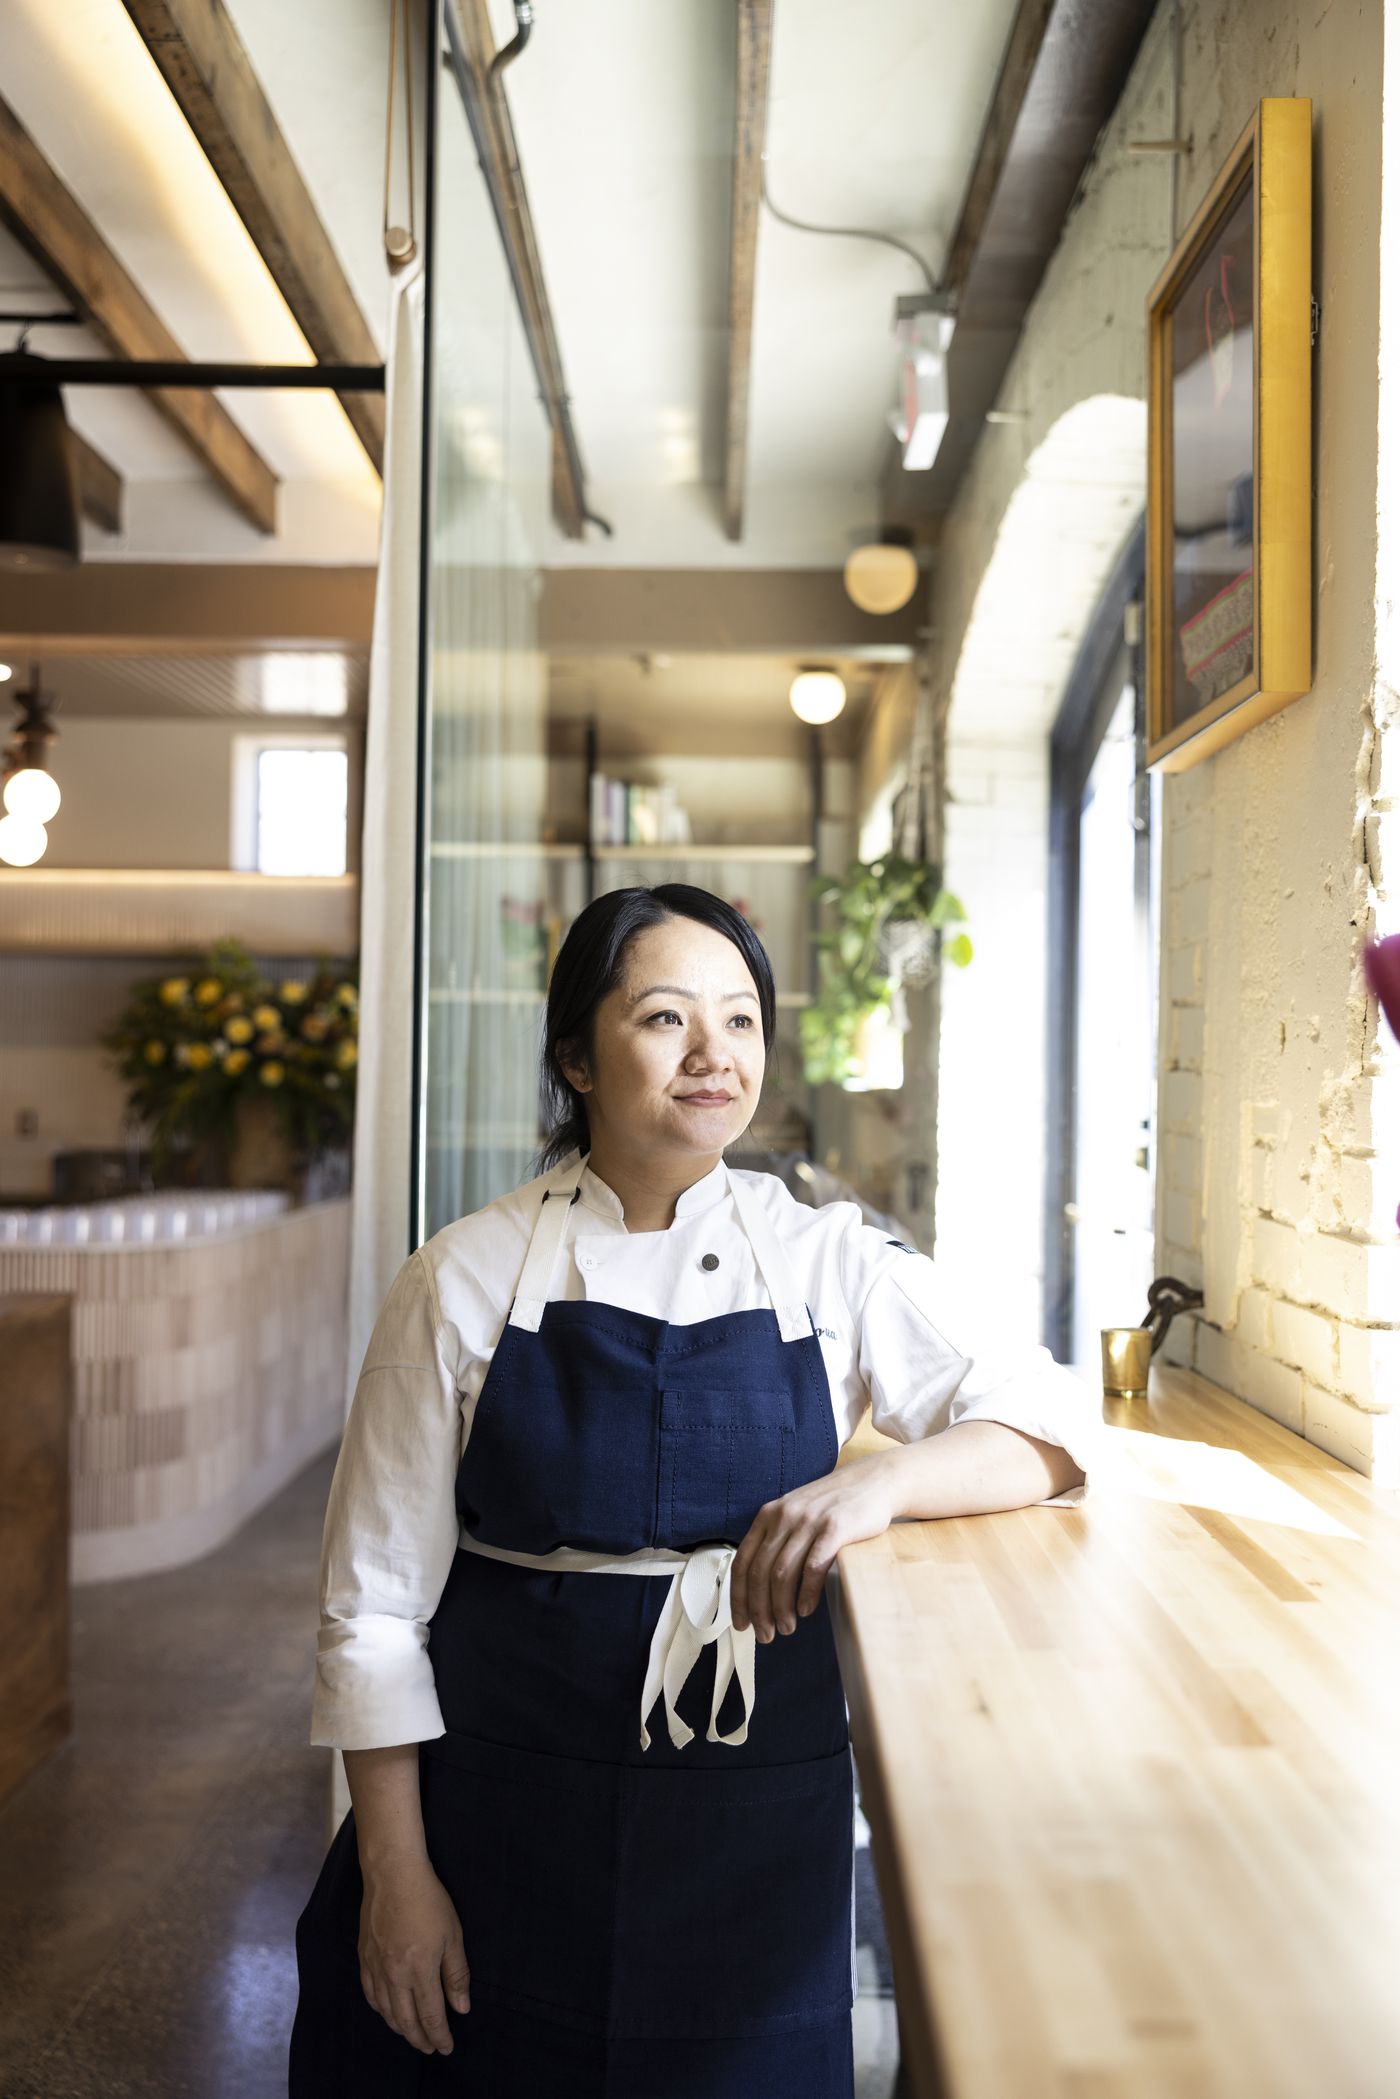 inside diane’s place, a landmark new restaurant for hmong american cuisine